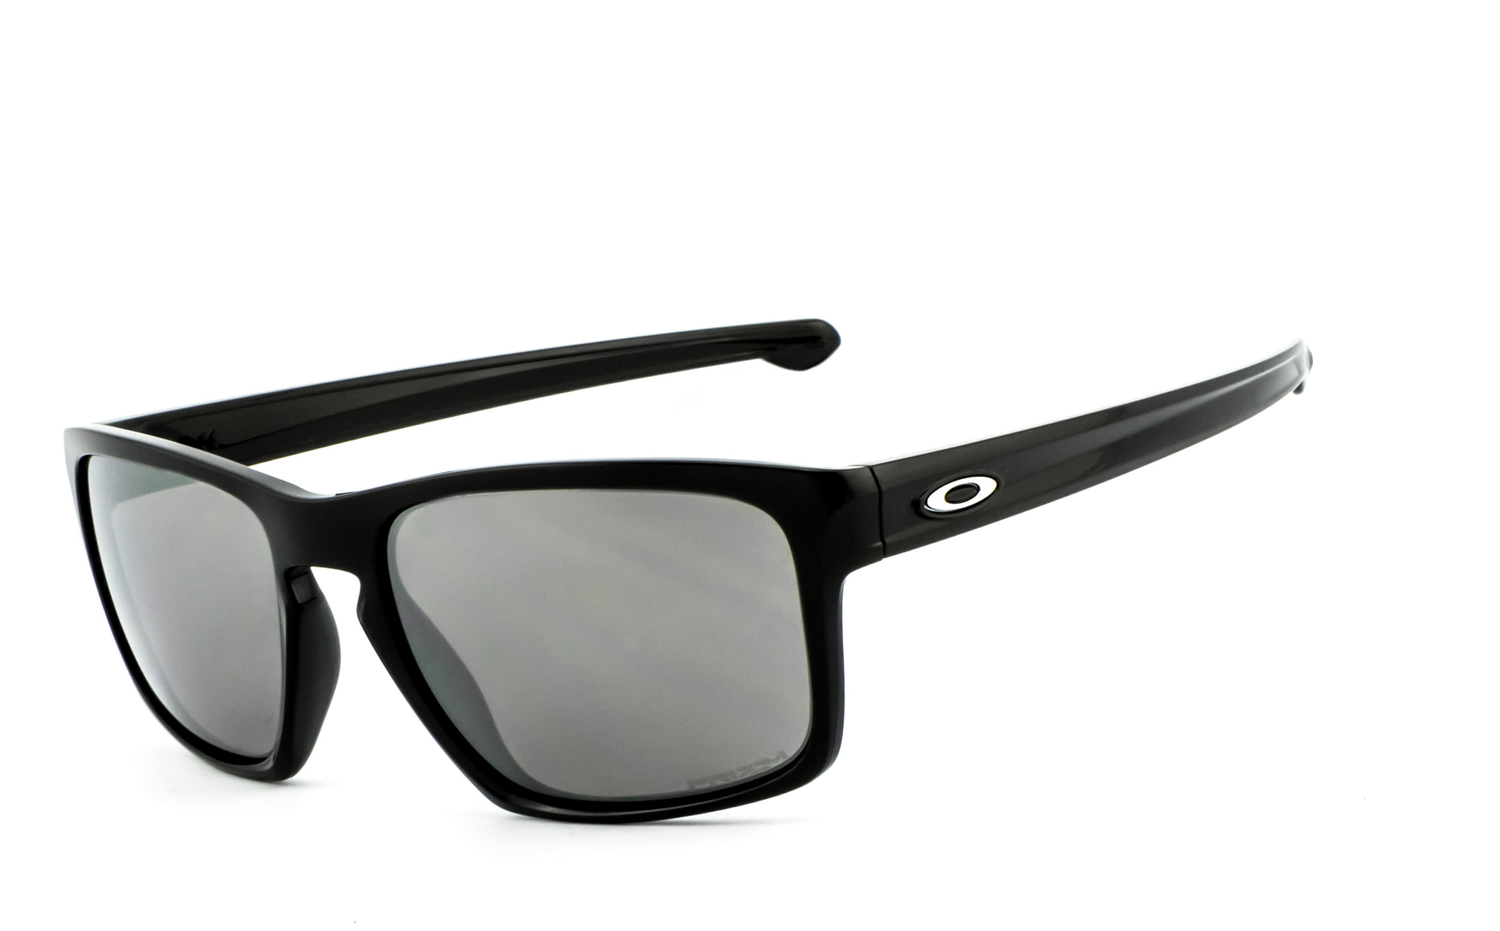 OAKLEY | Sliver - OO9262  Sportbrille, Fahrradbrille, Sonnenbrille, Bikerbrille, Radbrille, UV400 Schutzfilter